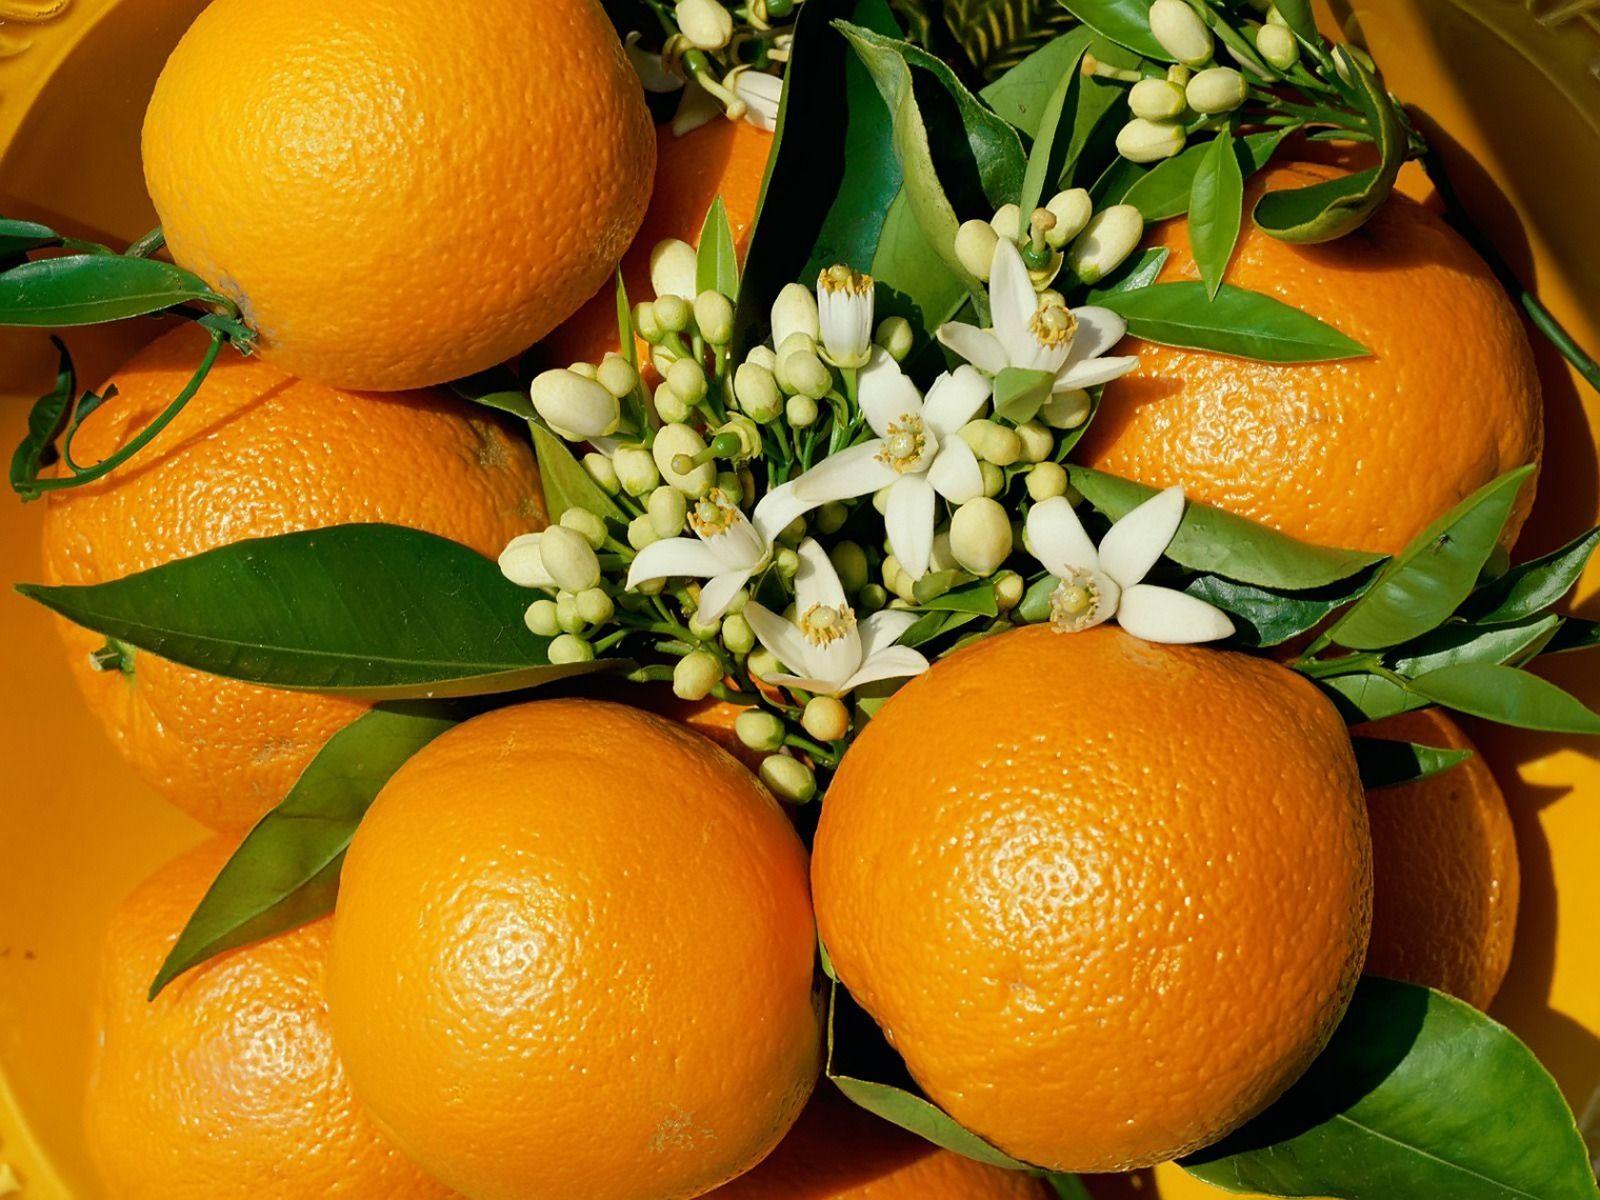 Oranges Wallpaper Plants Nature Wallpaper in jpg format for free